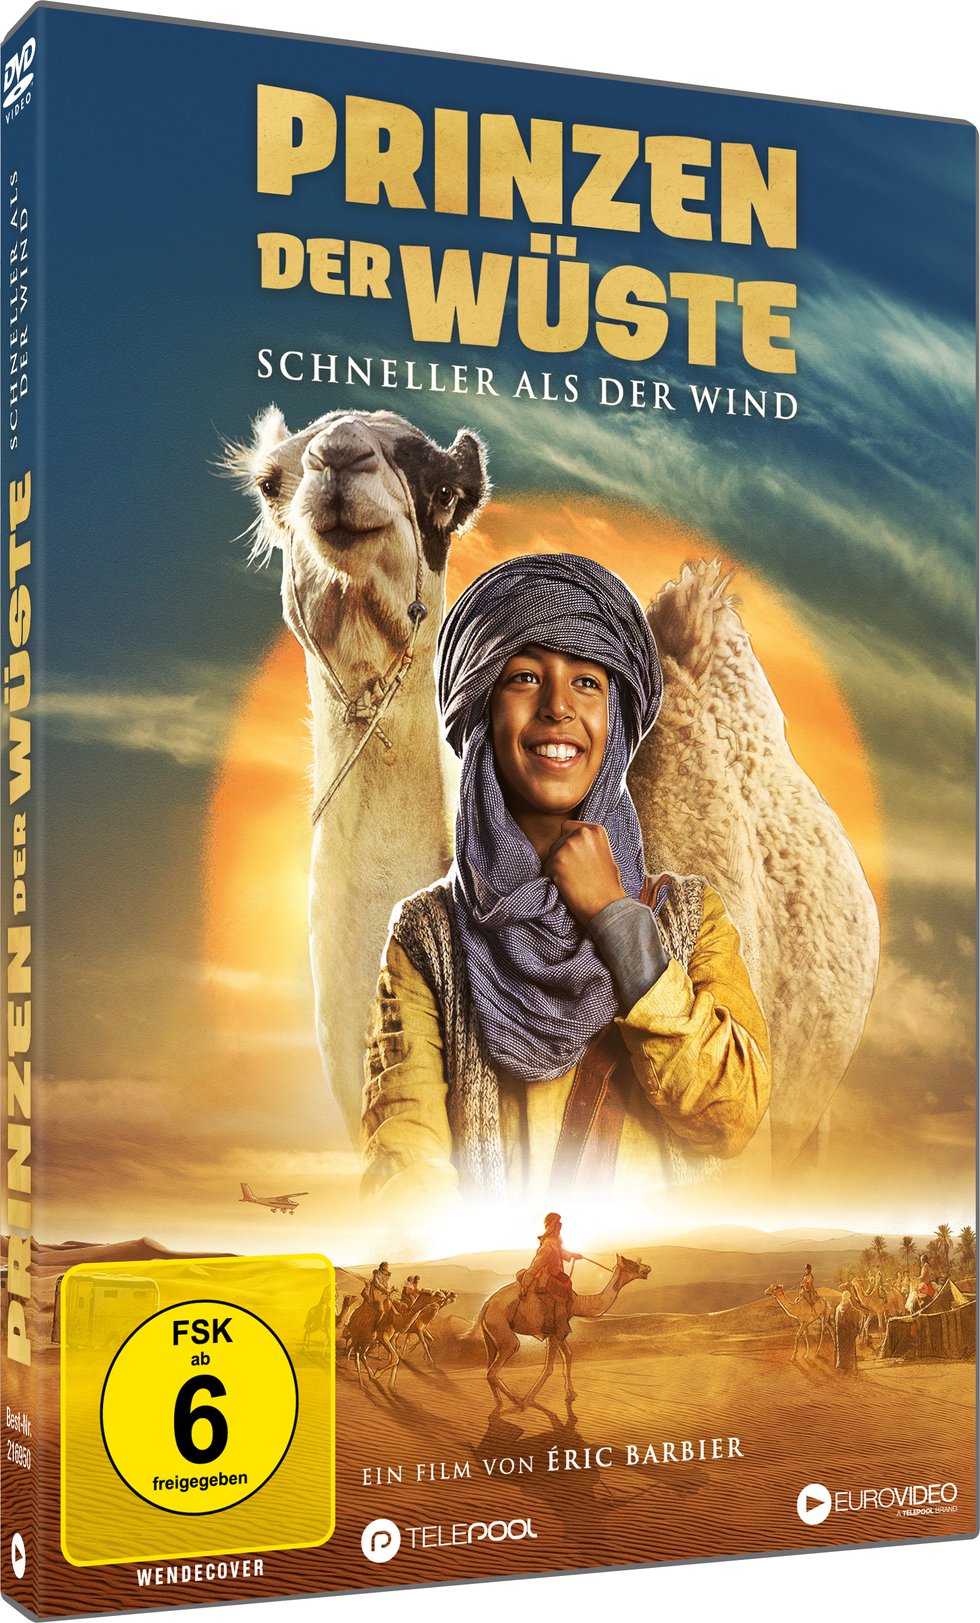 Prinzen-der-Wueste_DVD-Packshot3D.jpg